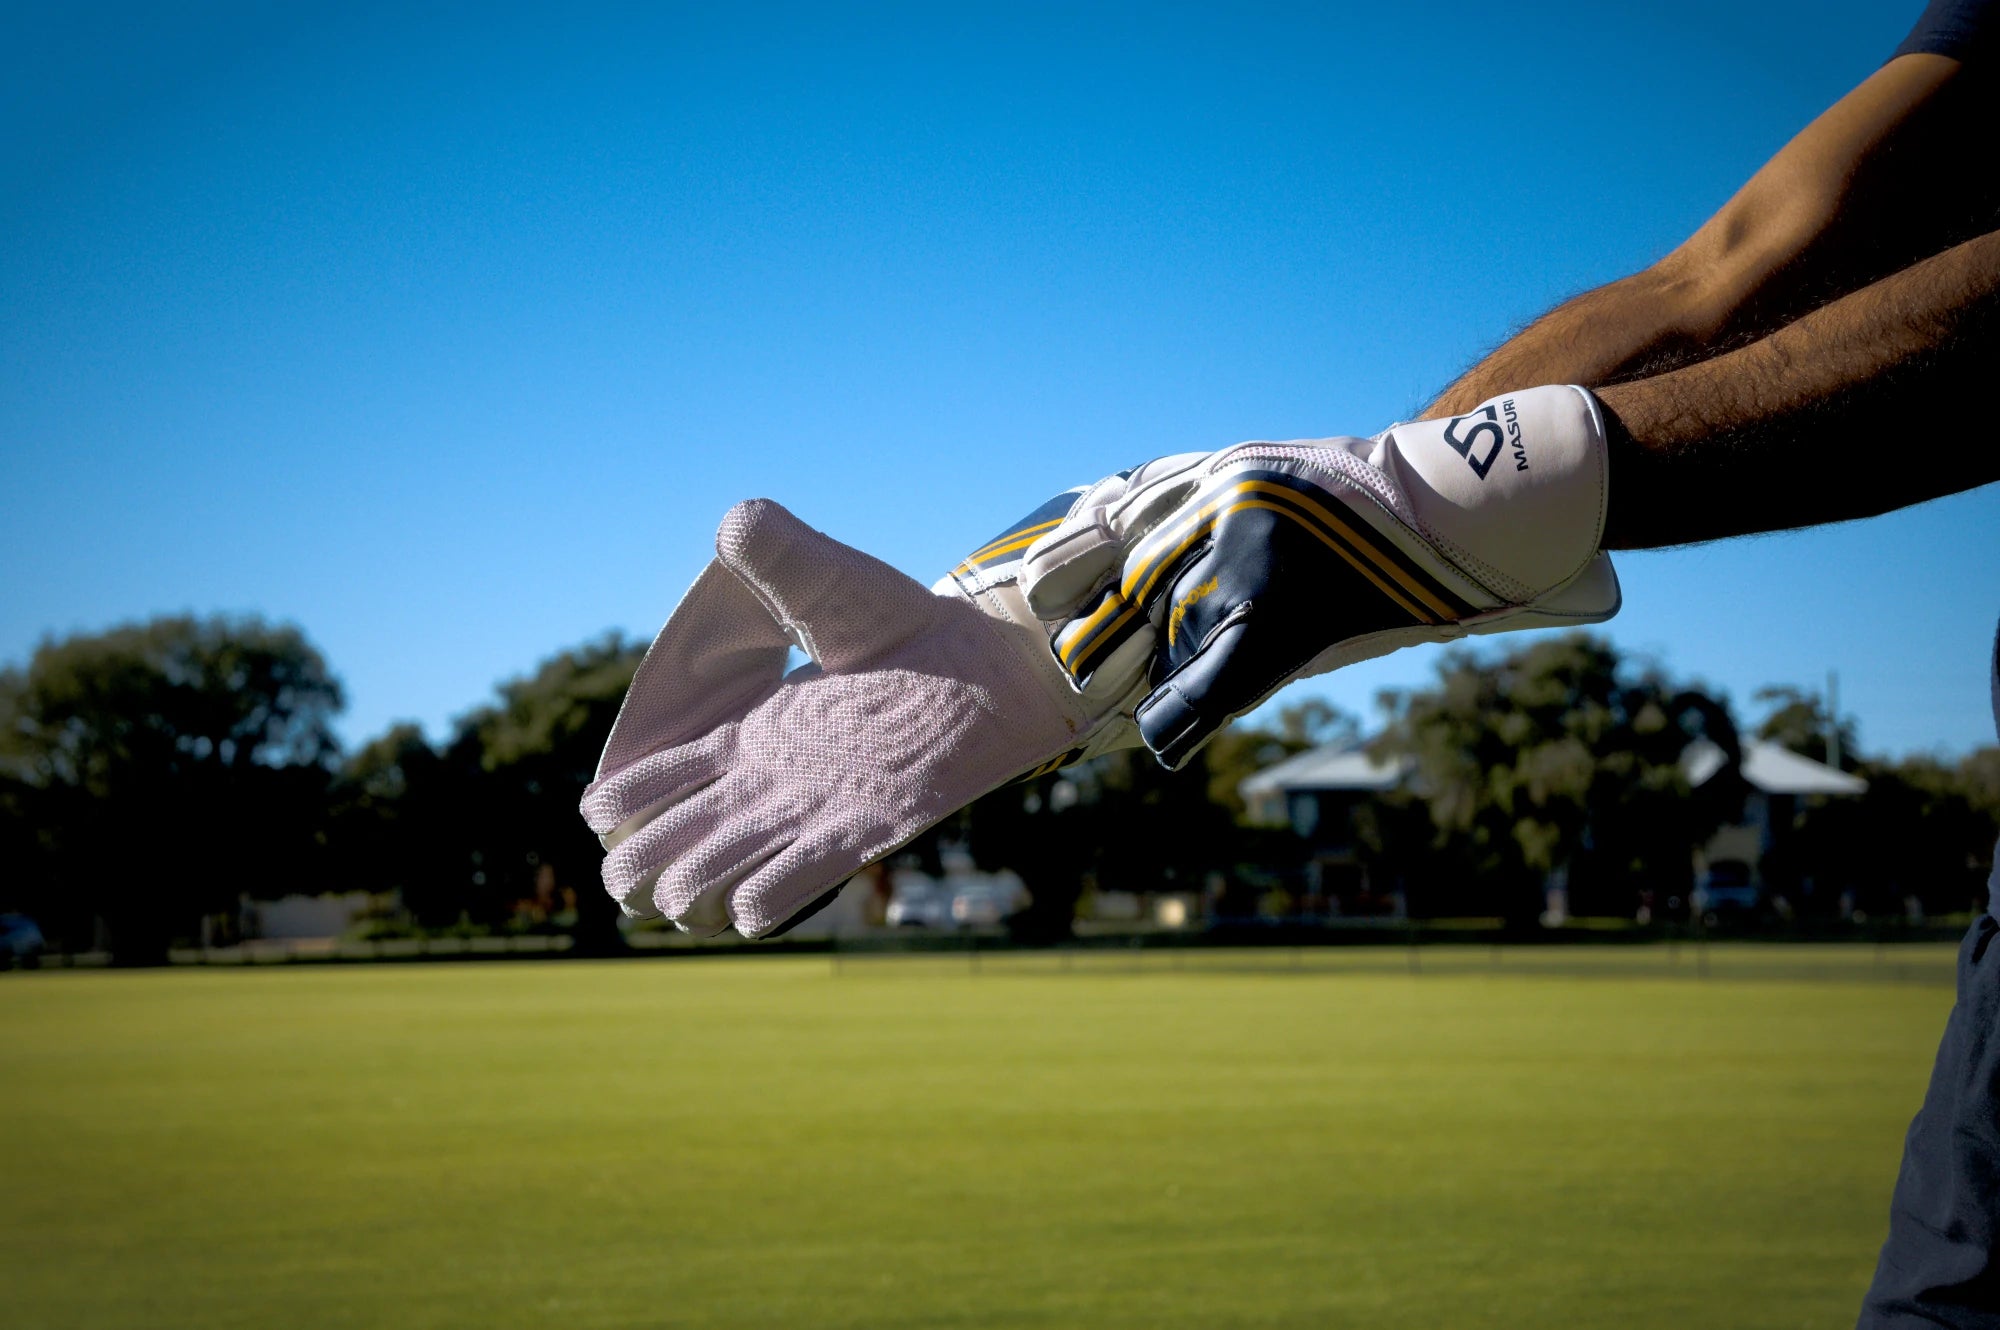 Masuri Wicket Keeping Gloves